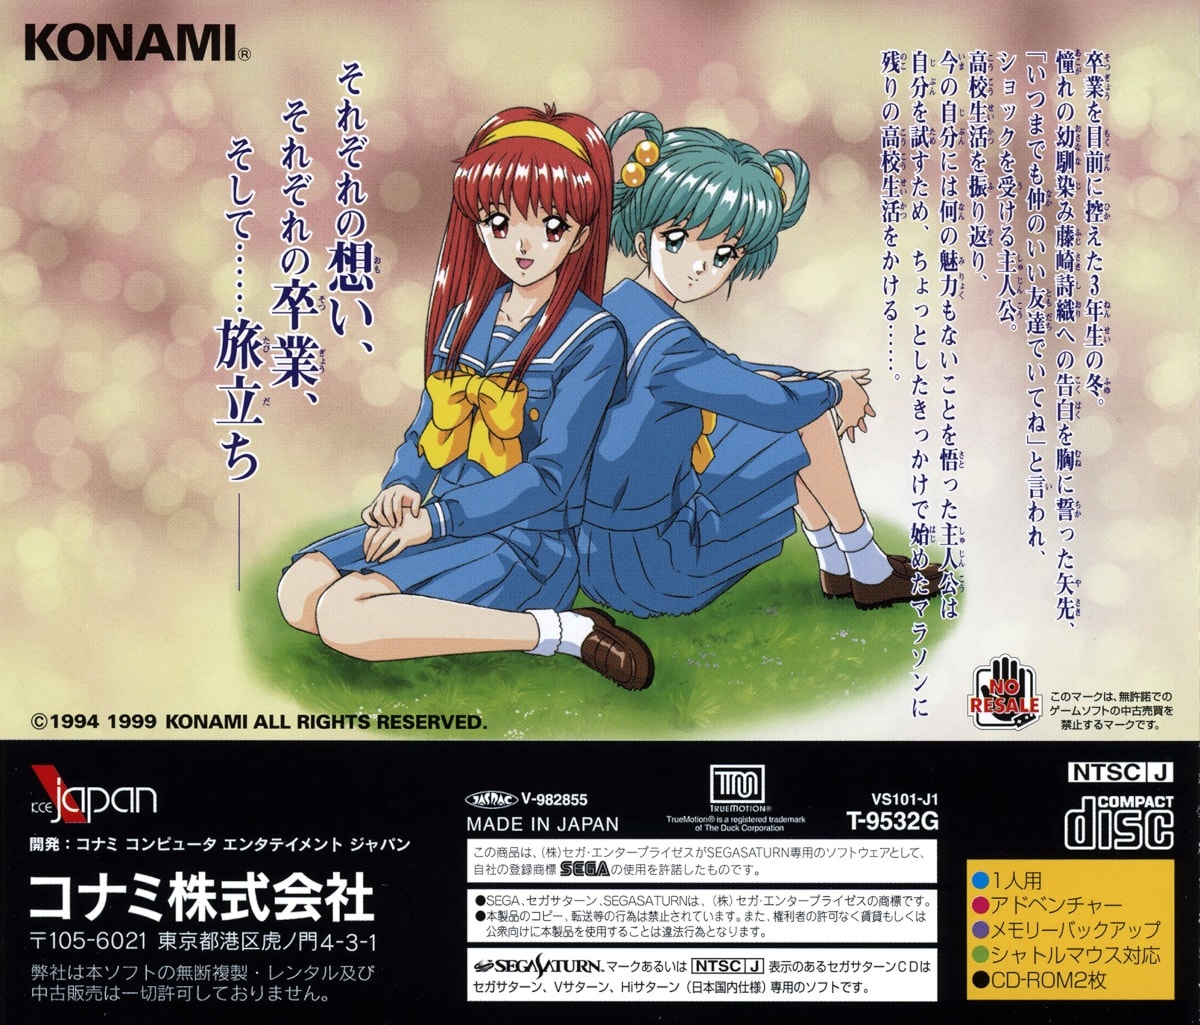 Tokimeki Memorial Drama Series Vol. 3: Tabidachi no Uta cover